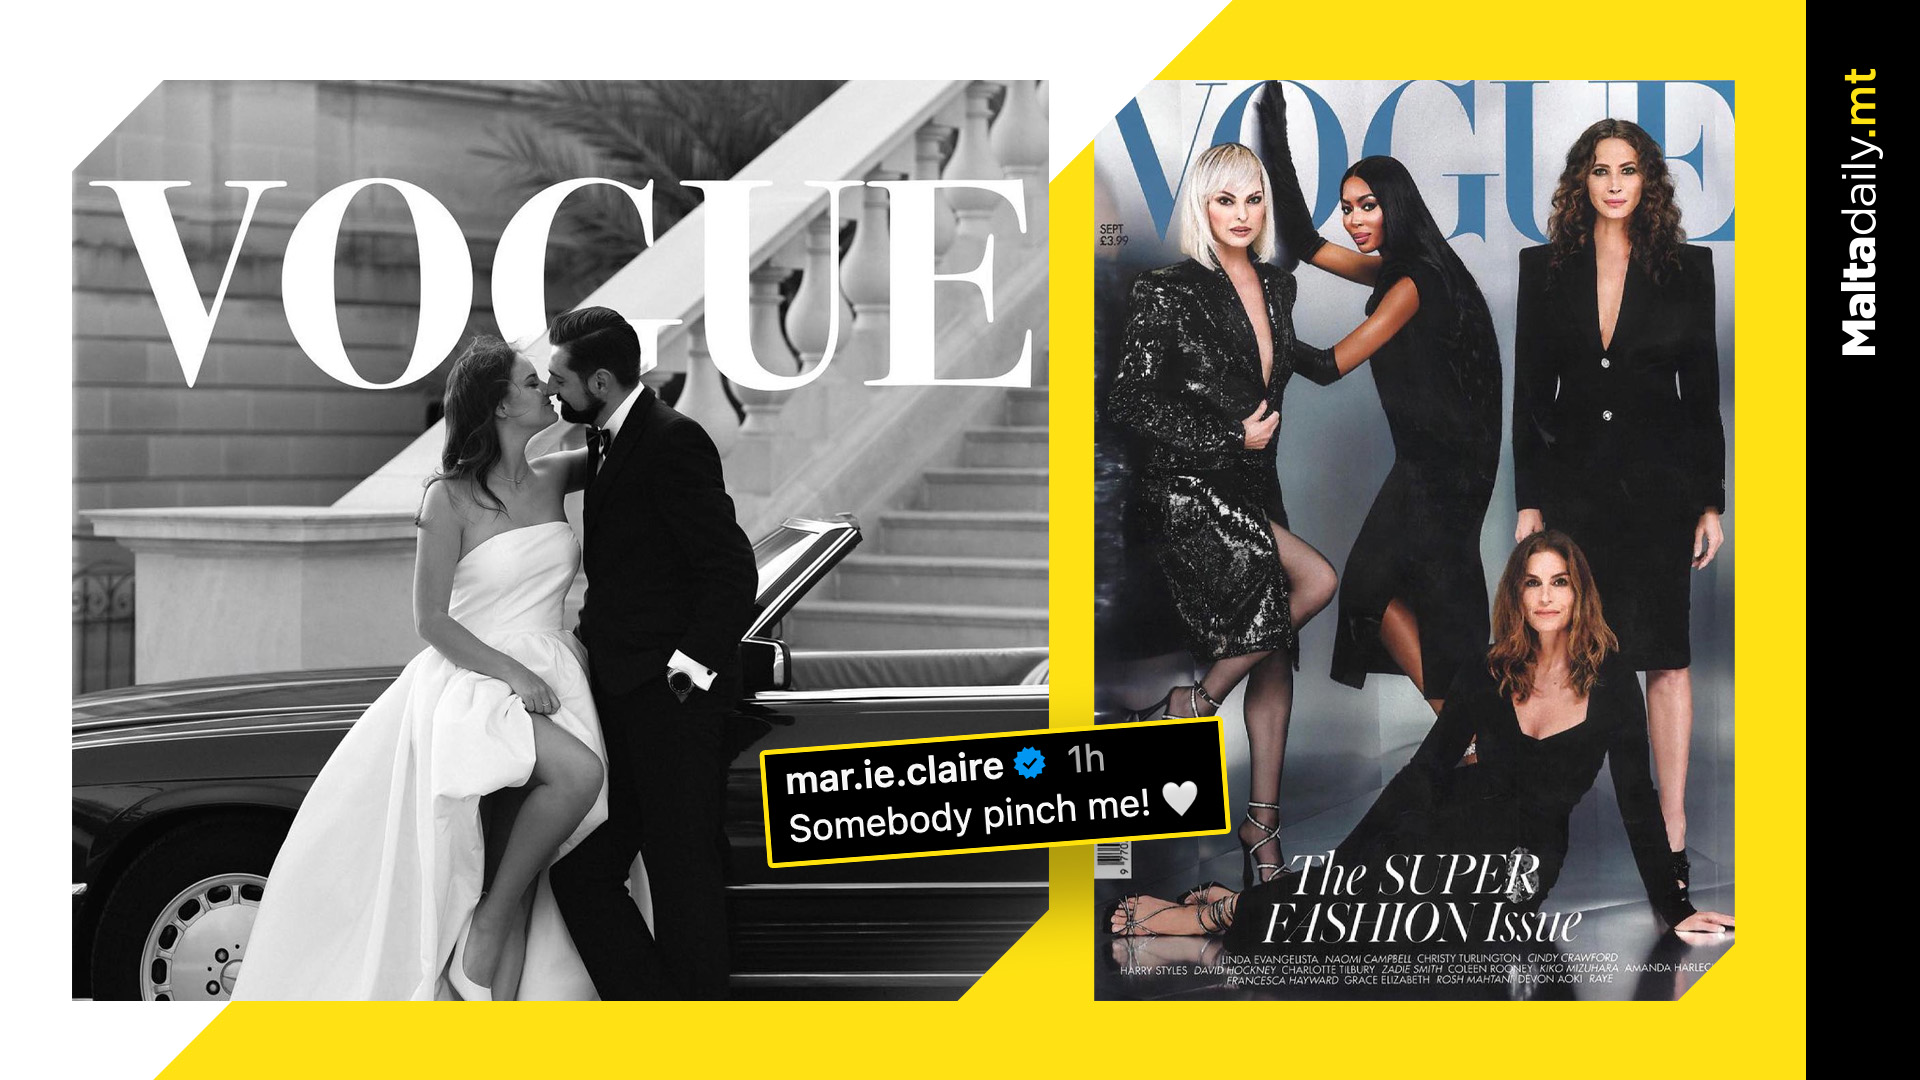 Maltese Couple Shine Bright on September Issue of British Vogue